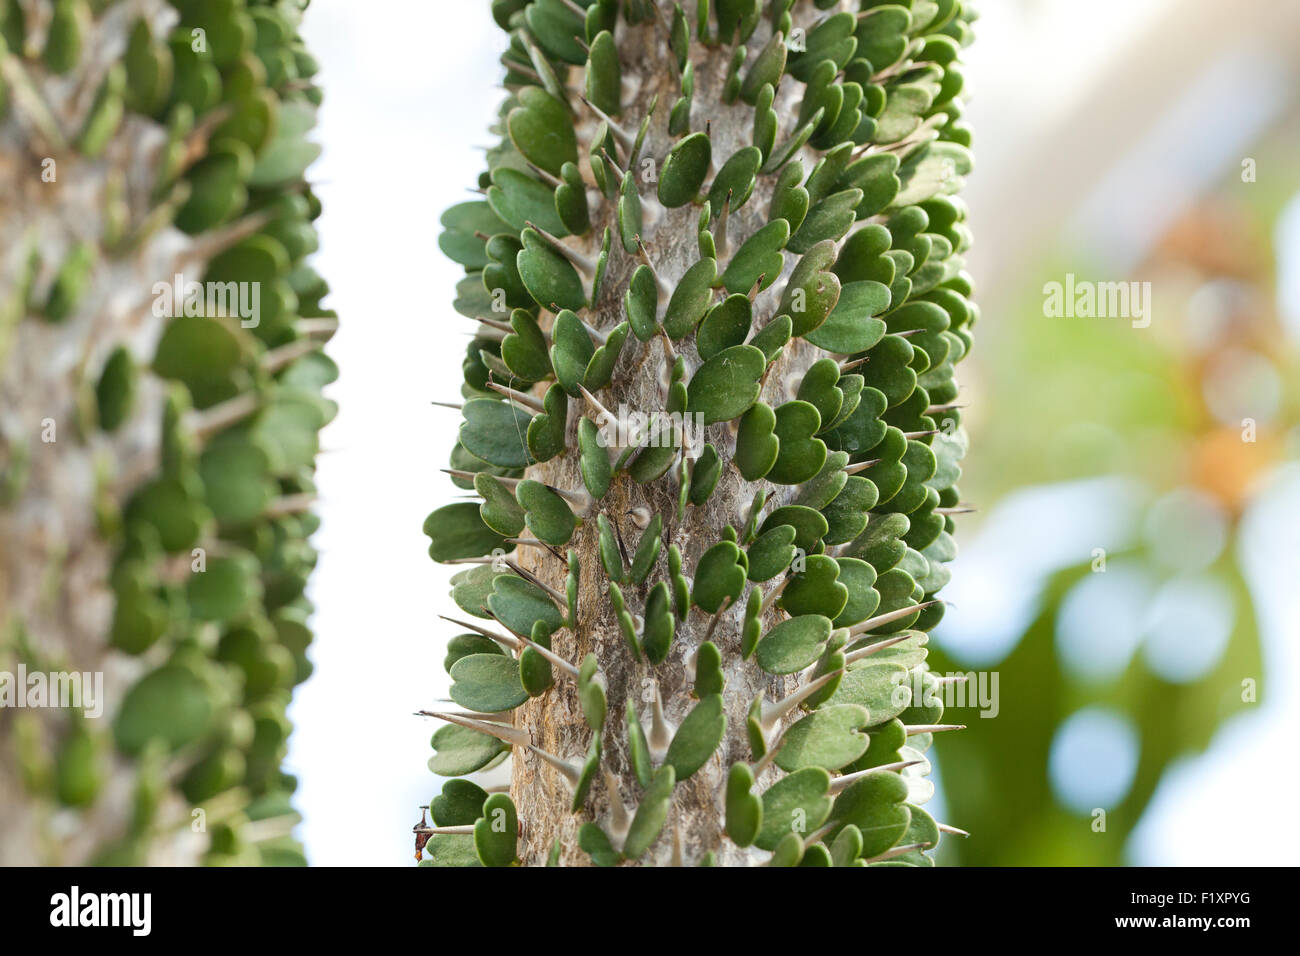 Alluaudia montagnacii (devil's dagger) plant native to Madagascar Stock Photo